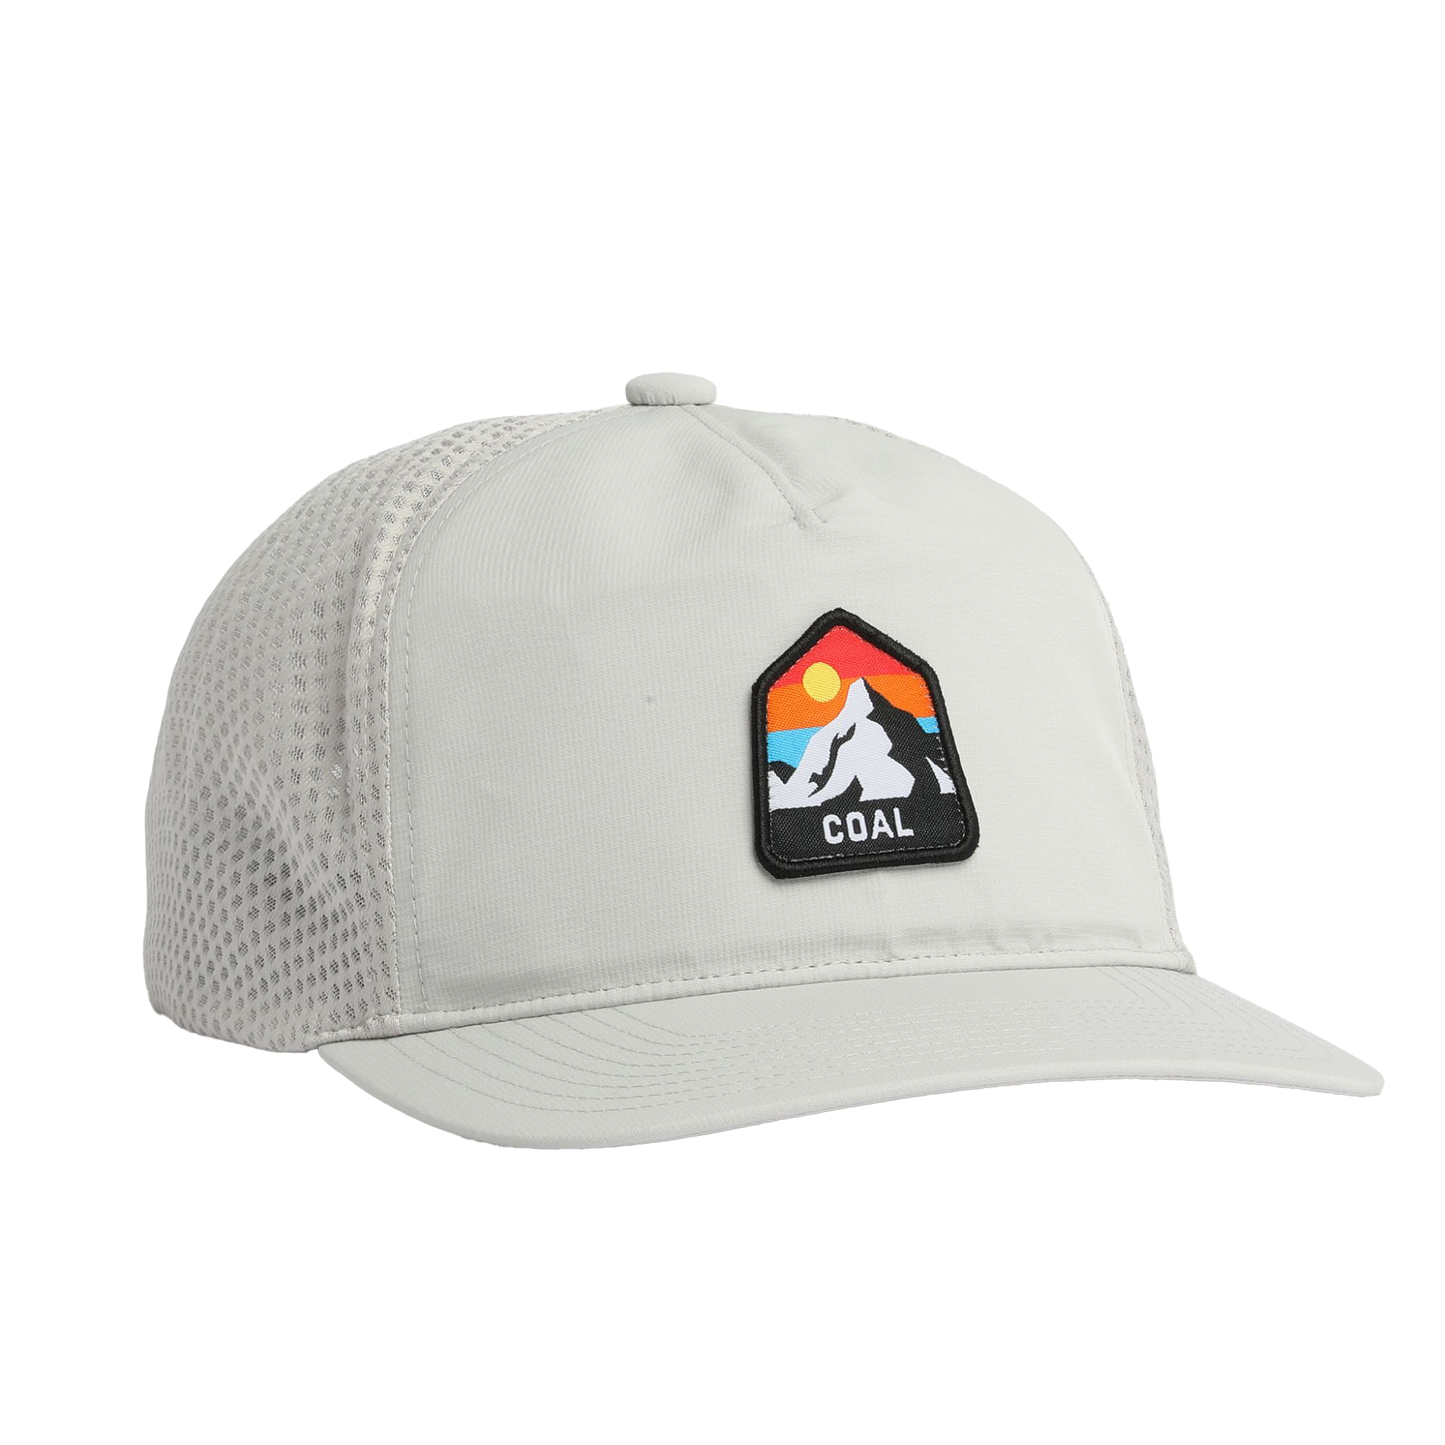 Coal One Peak Hat Light Grey OS Hats